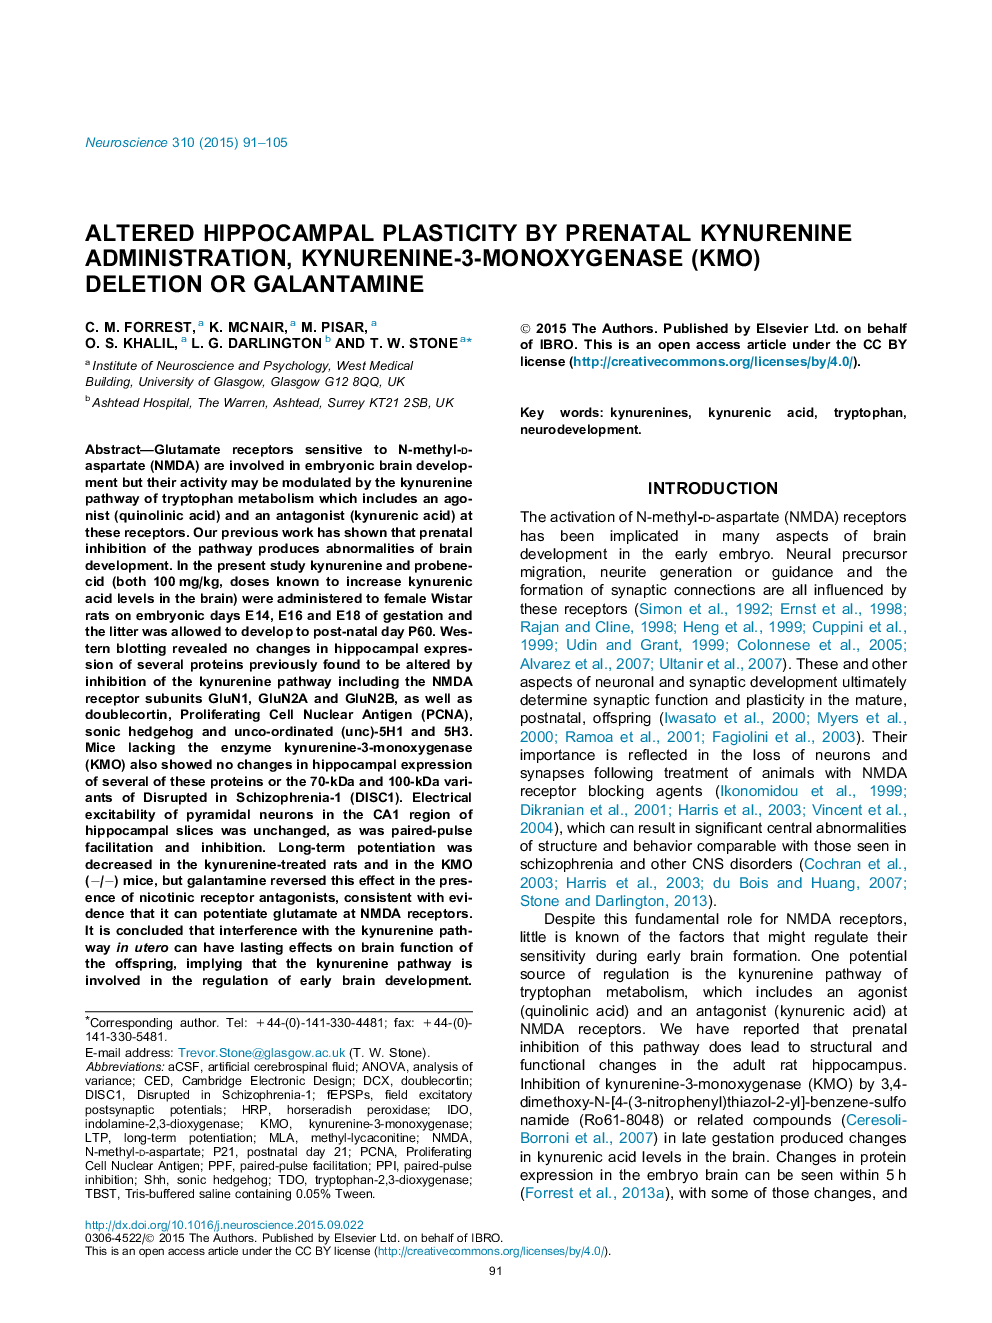 Altered hippocampal plasticity by prenatal kynurenine administration, kynurenine-3-monoxygenase (KMO) deletion or galantamine